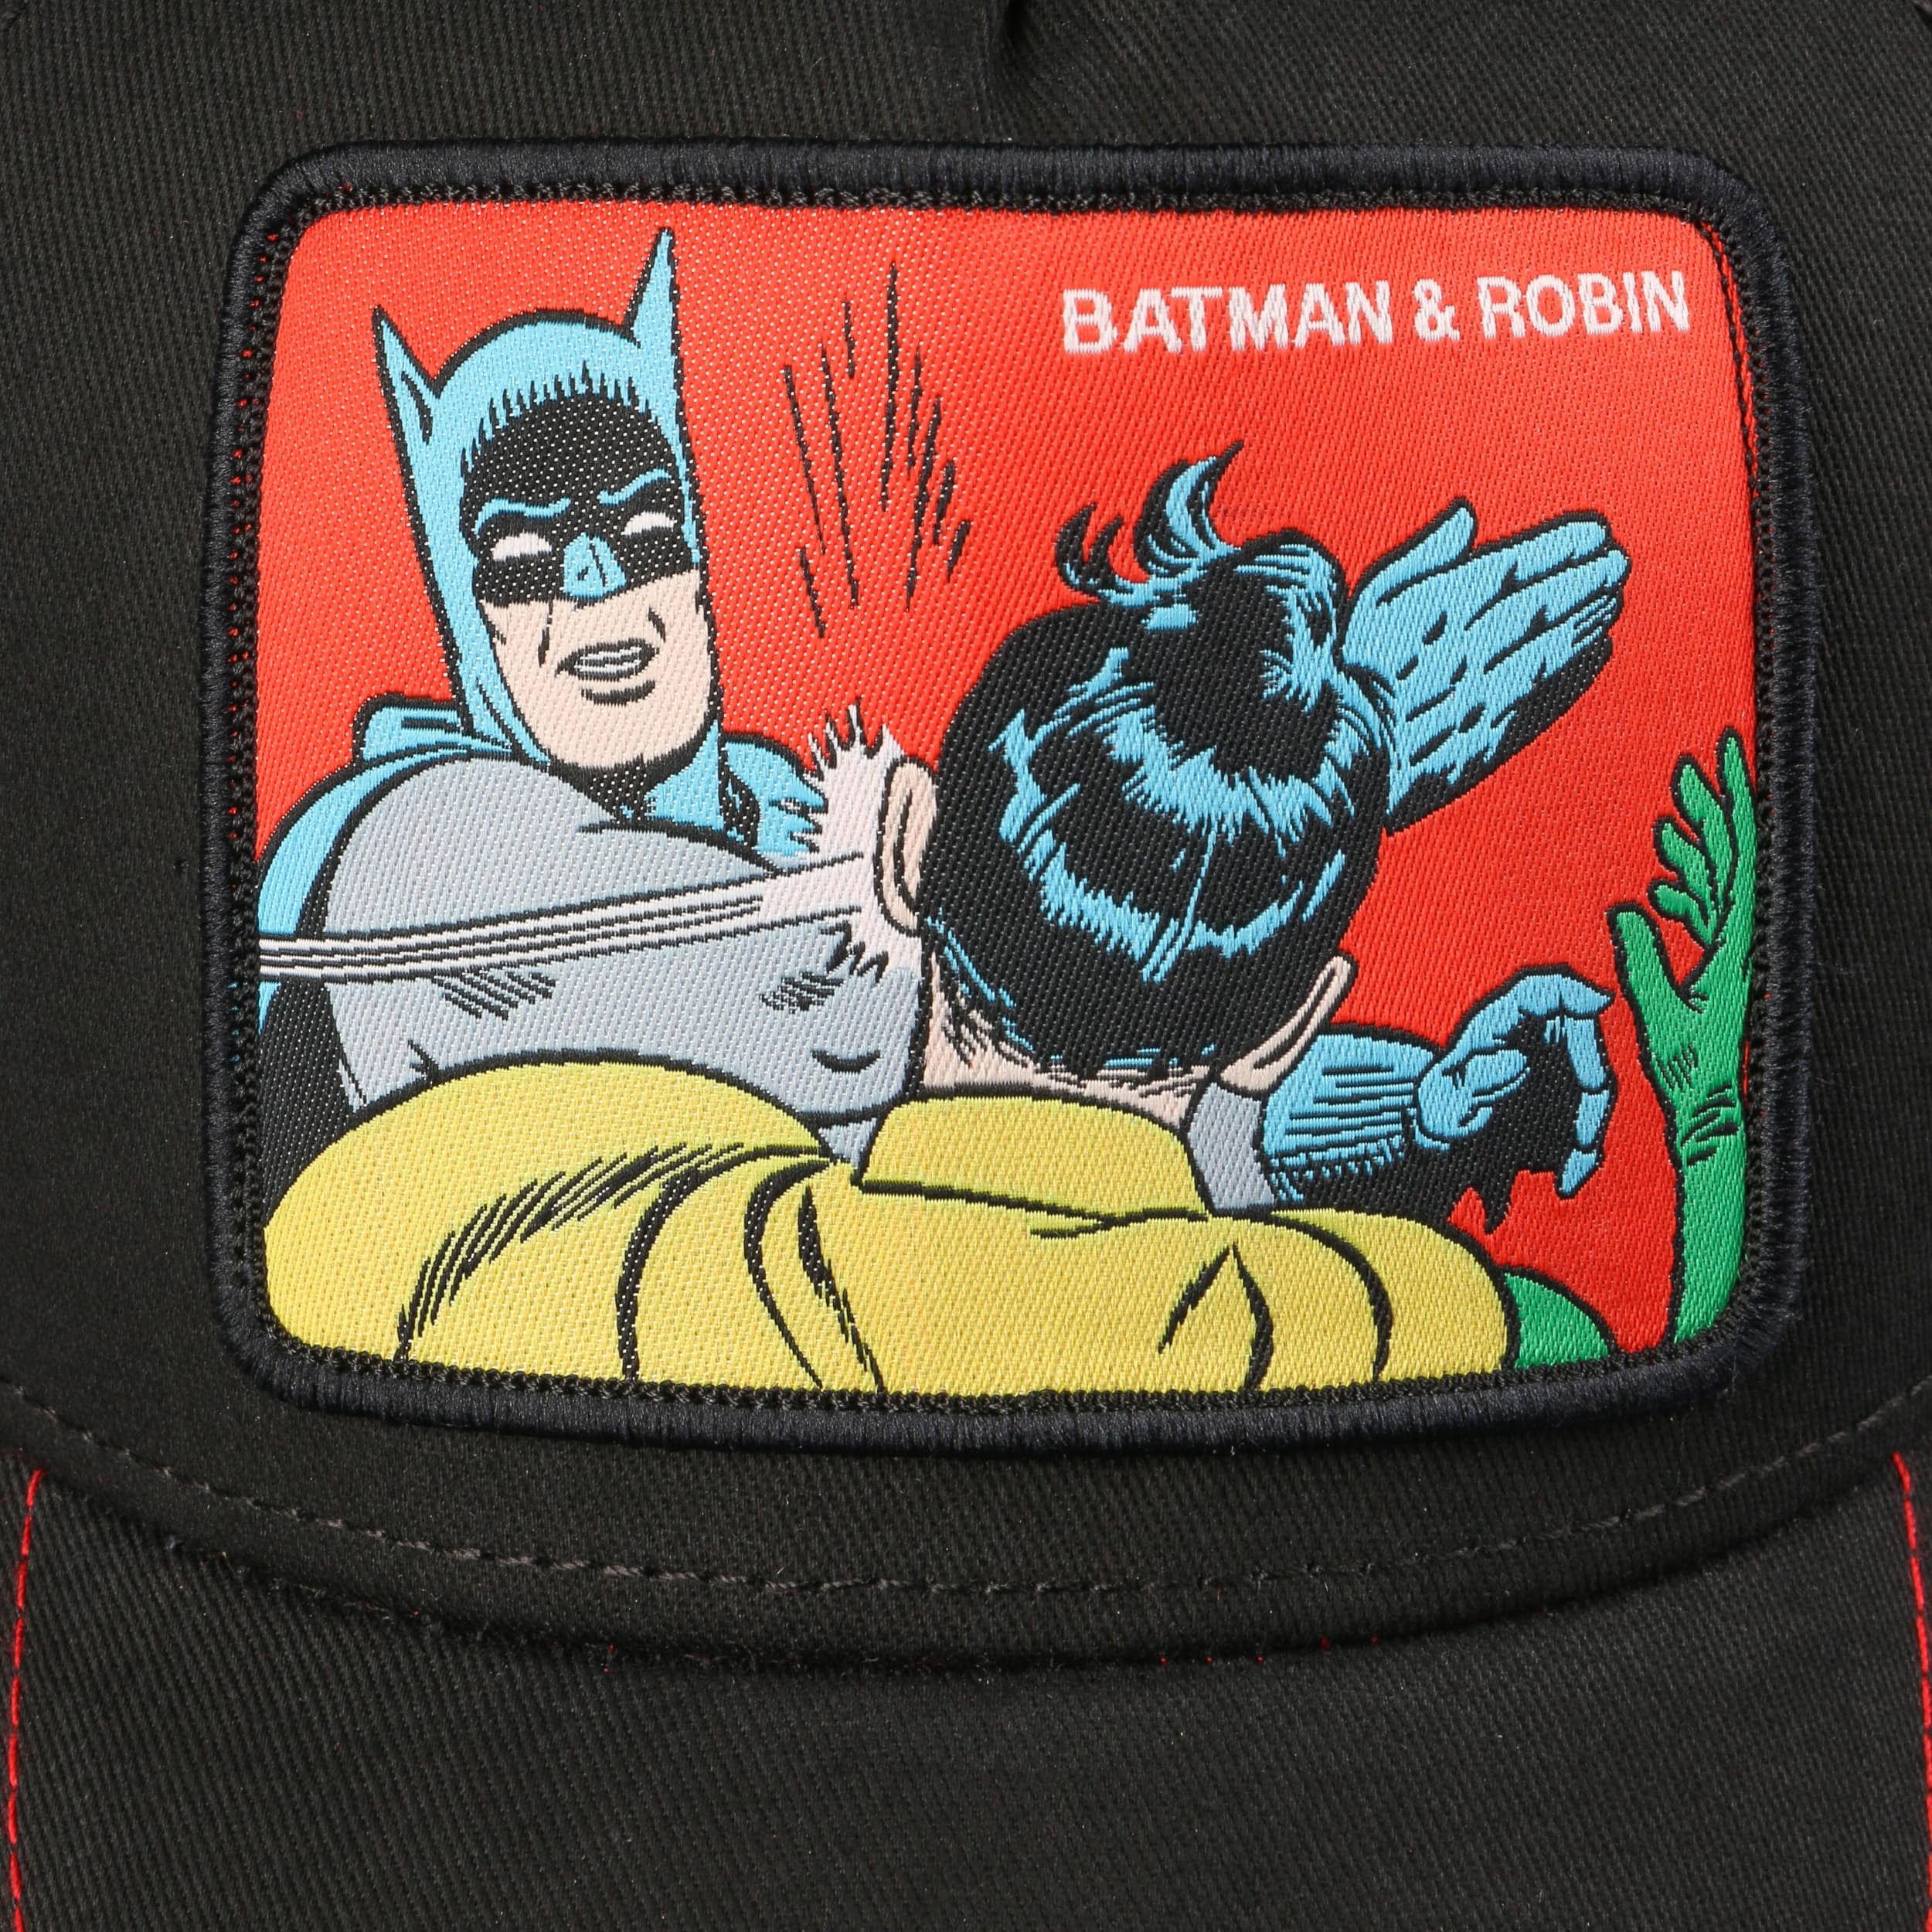 Batman & Robin Trucker Cap by Capslab - 31,95 £